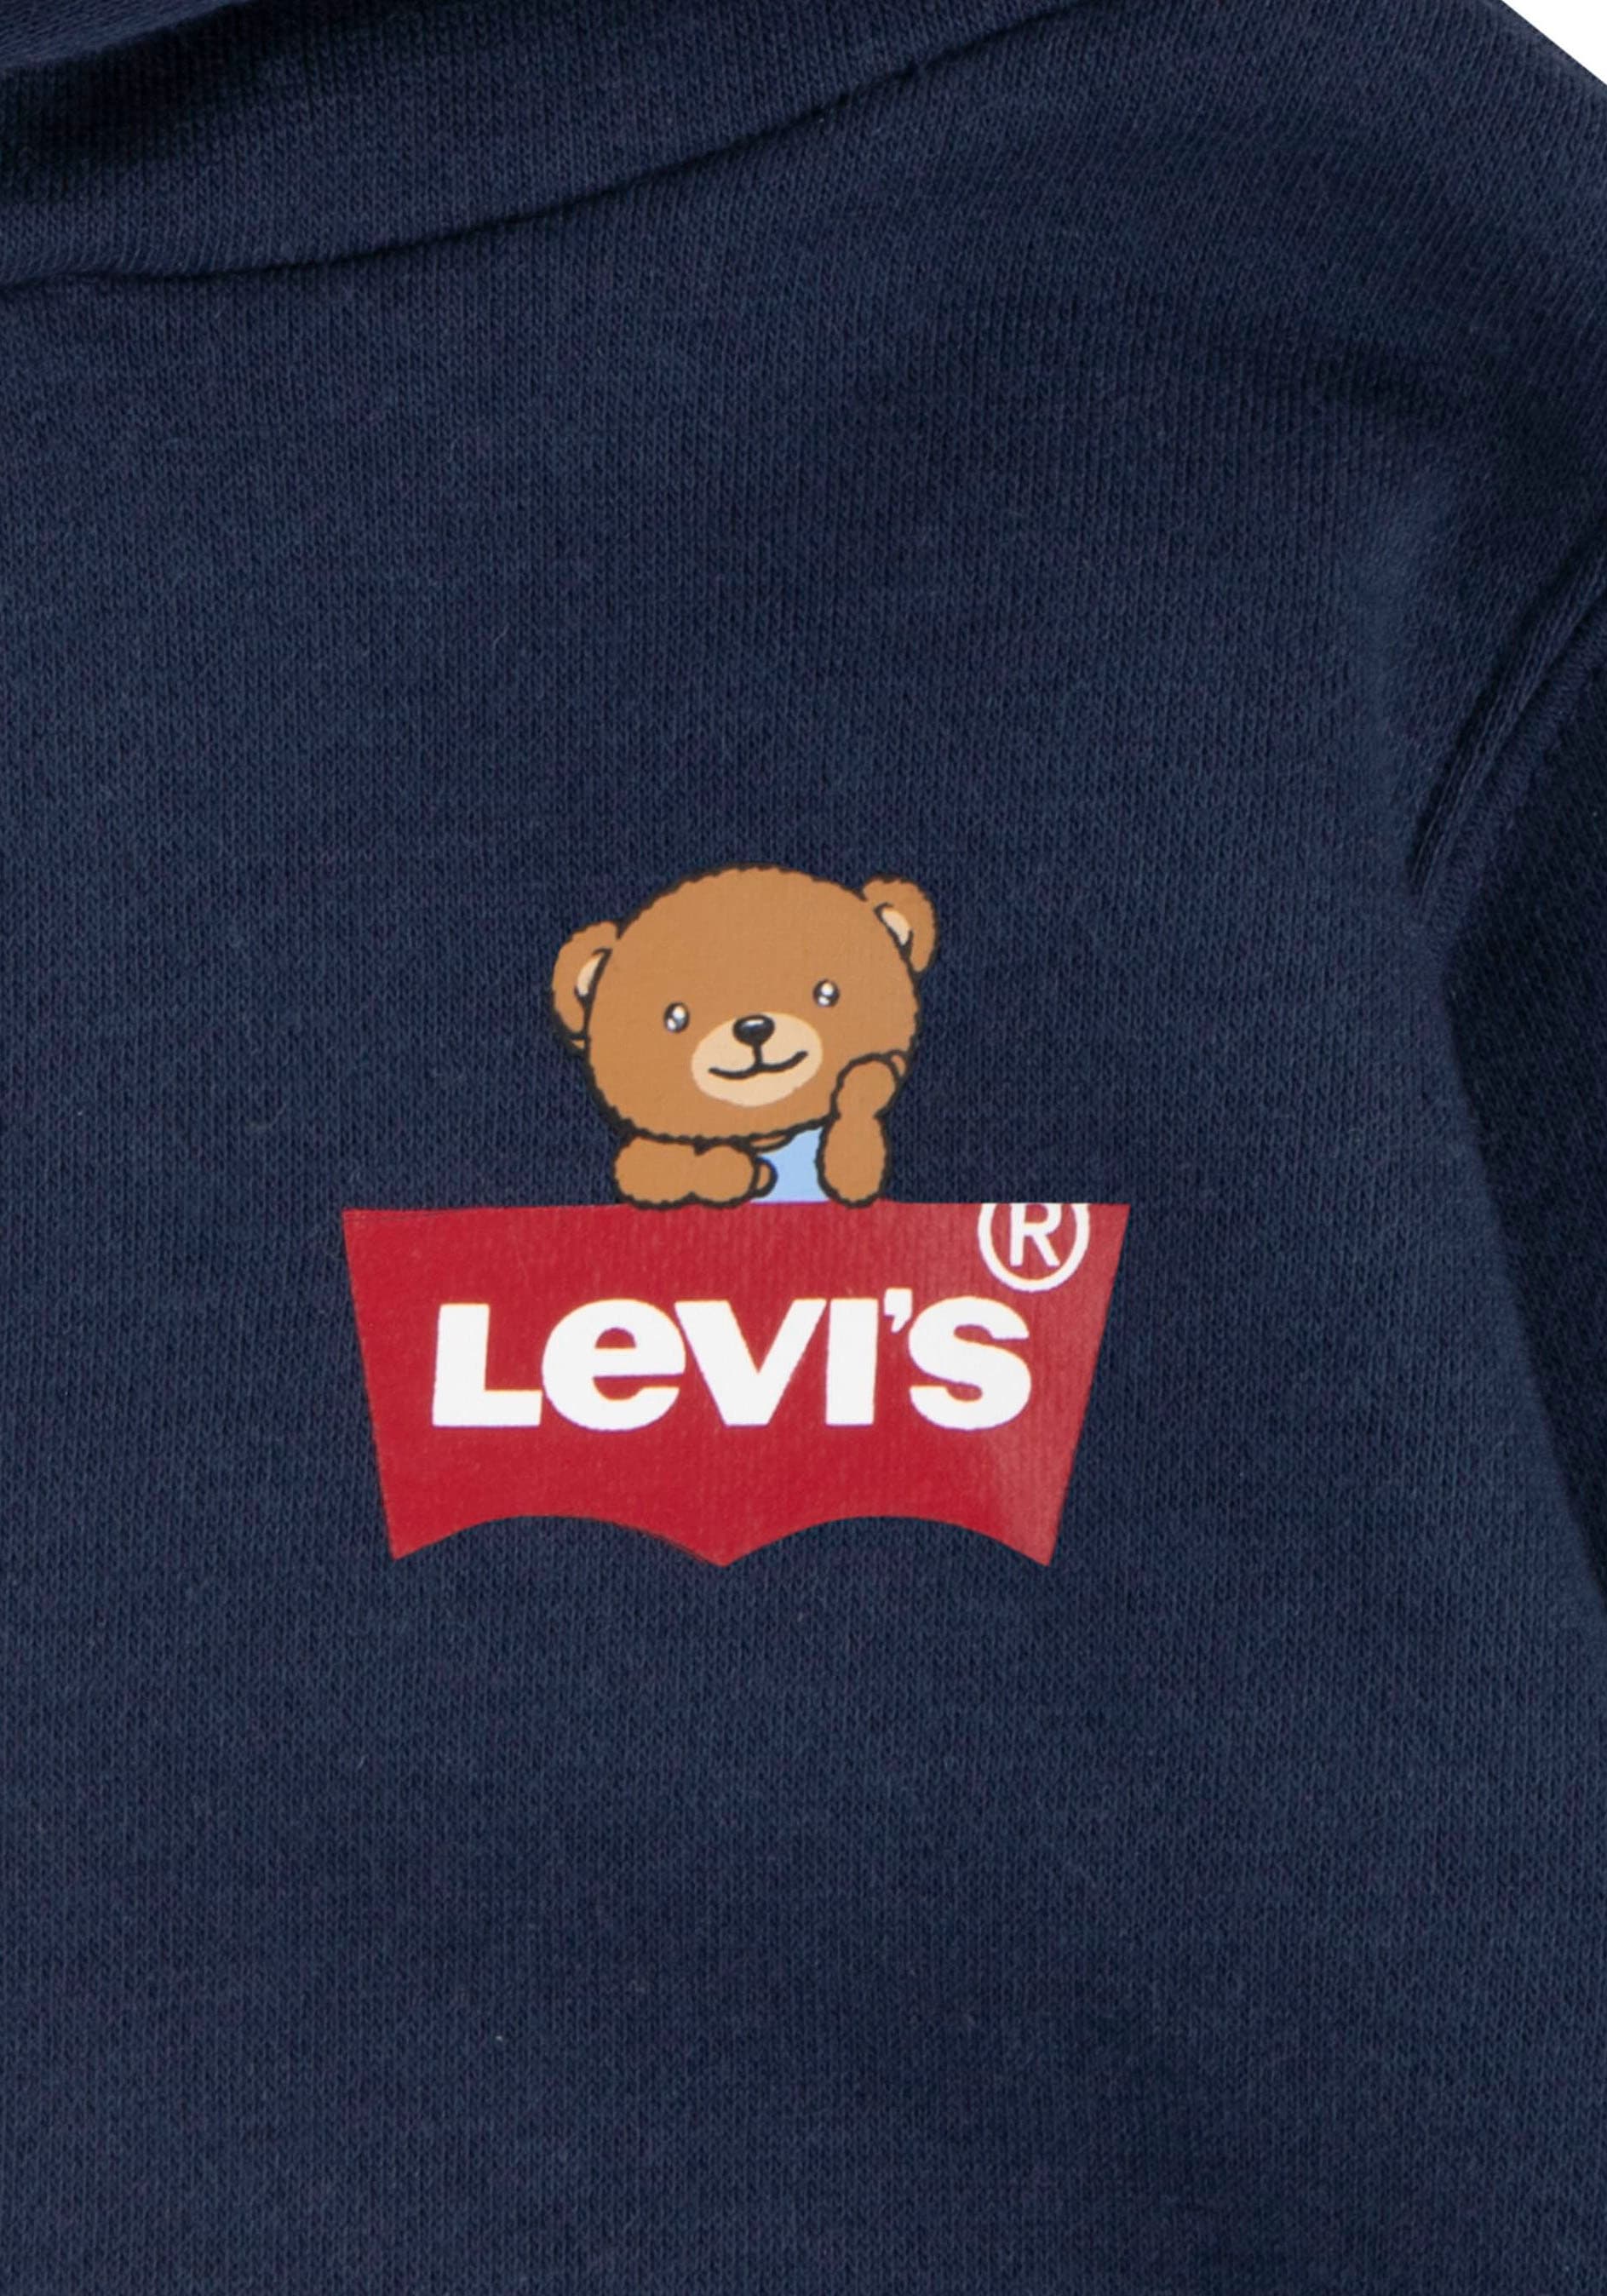 Levi's® Kids Pullover & Shorts »LVB SPLICED COLORBLOCK JOGGER SET«, for Baby BOYS